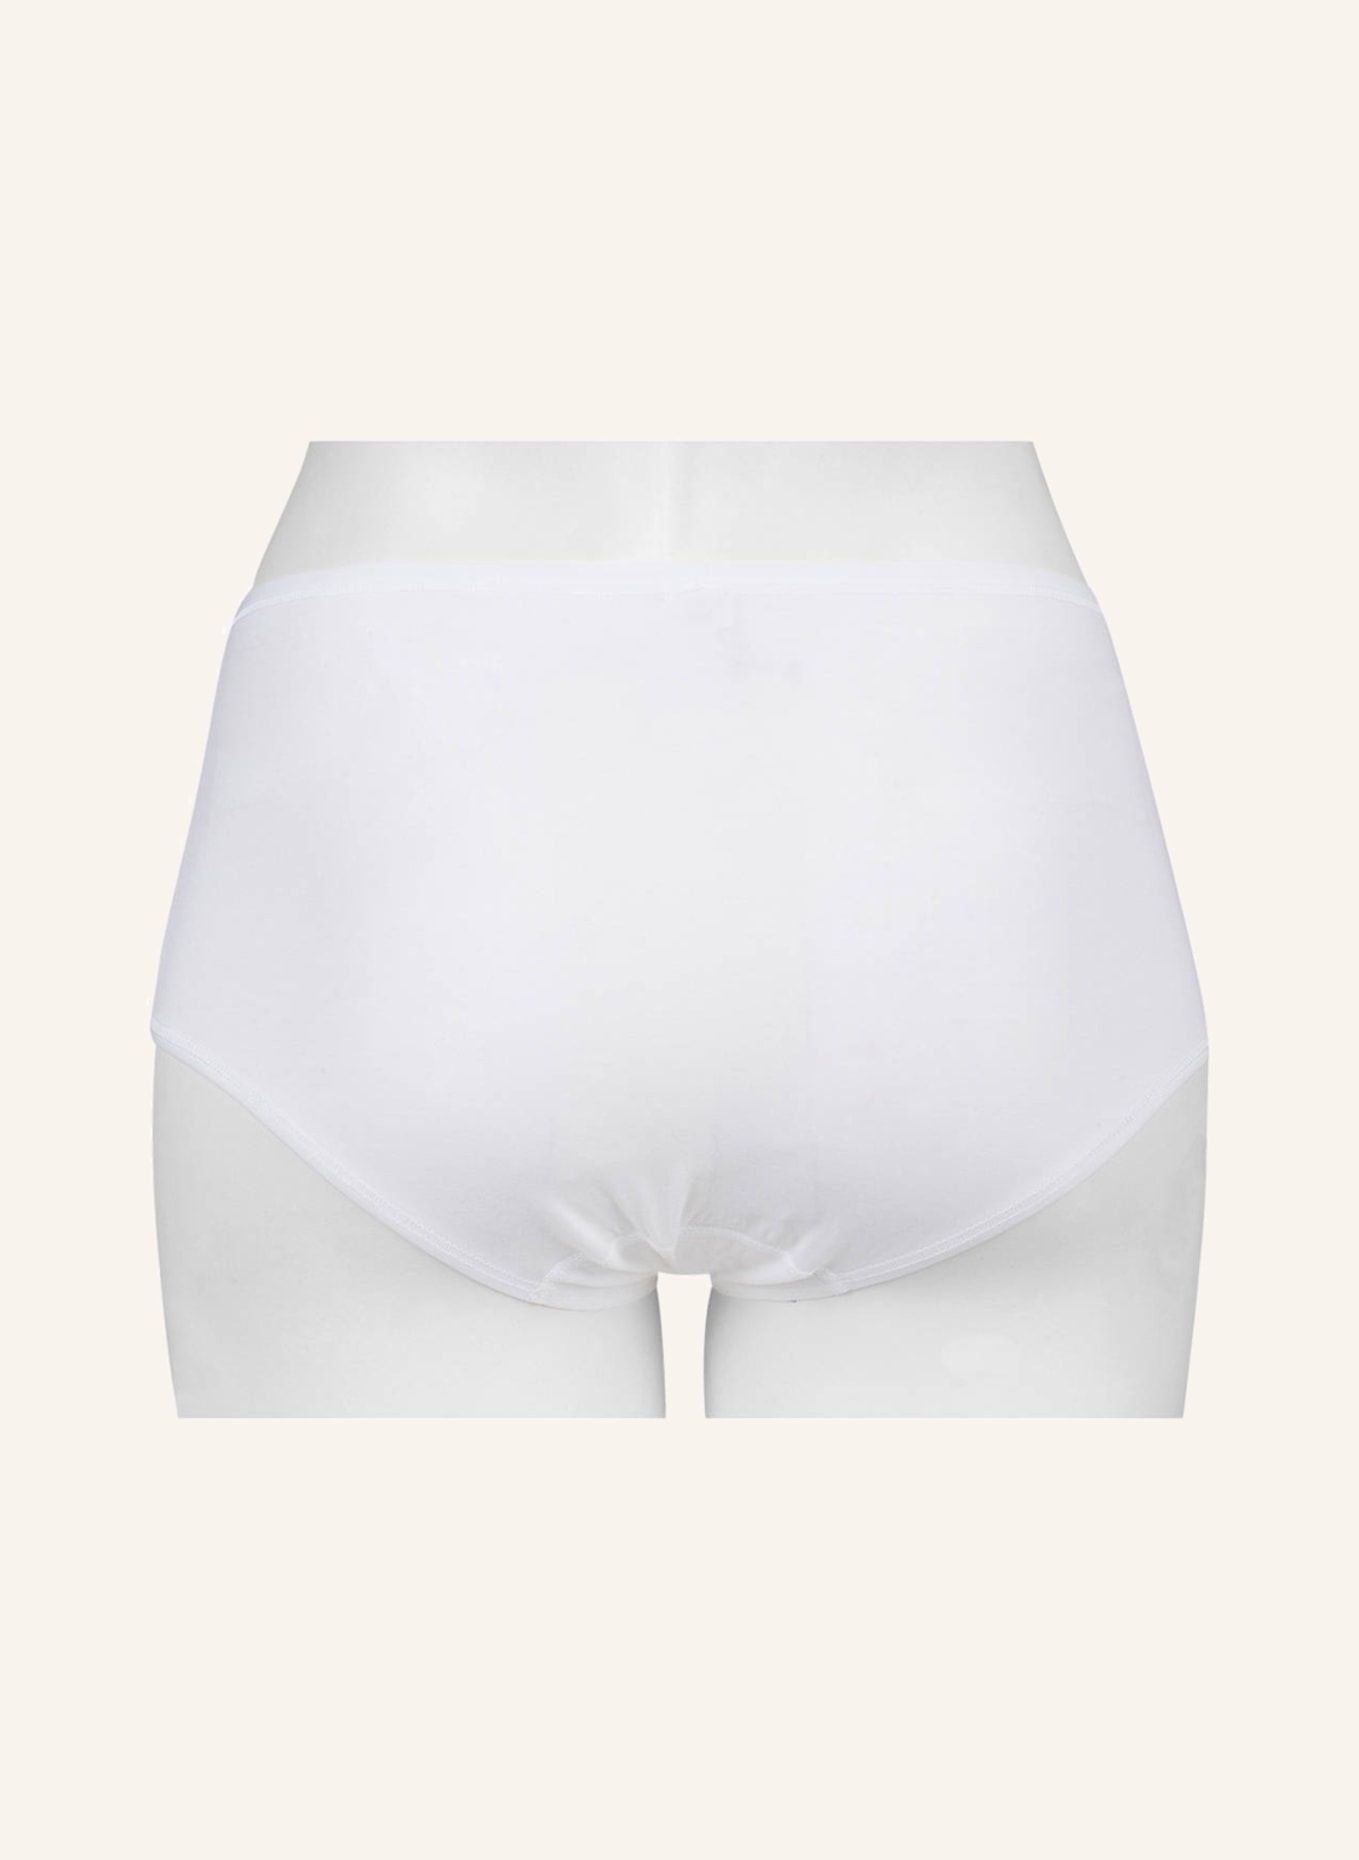 mey Panty series ORGANIC in white